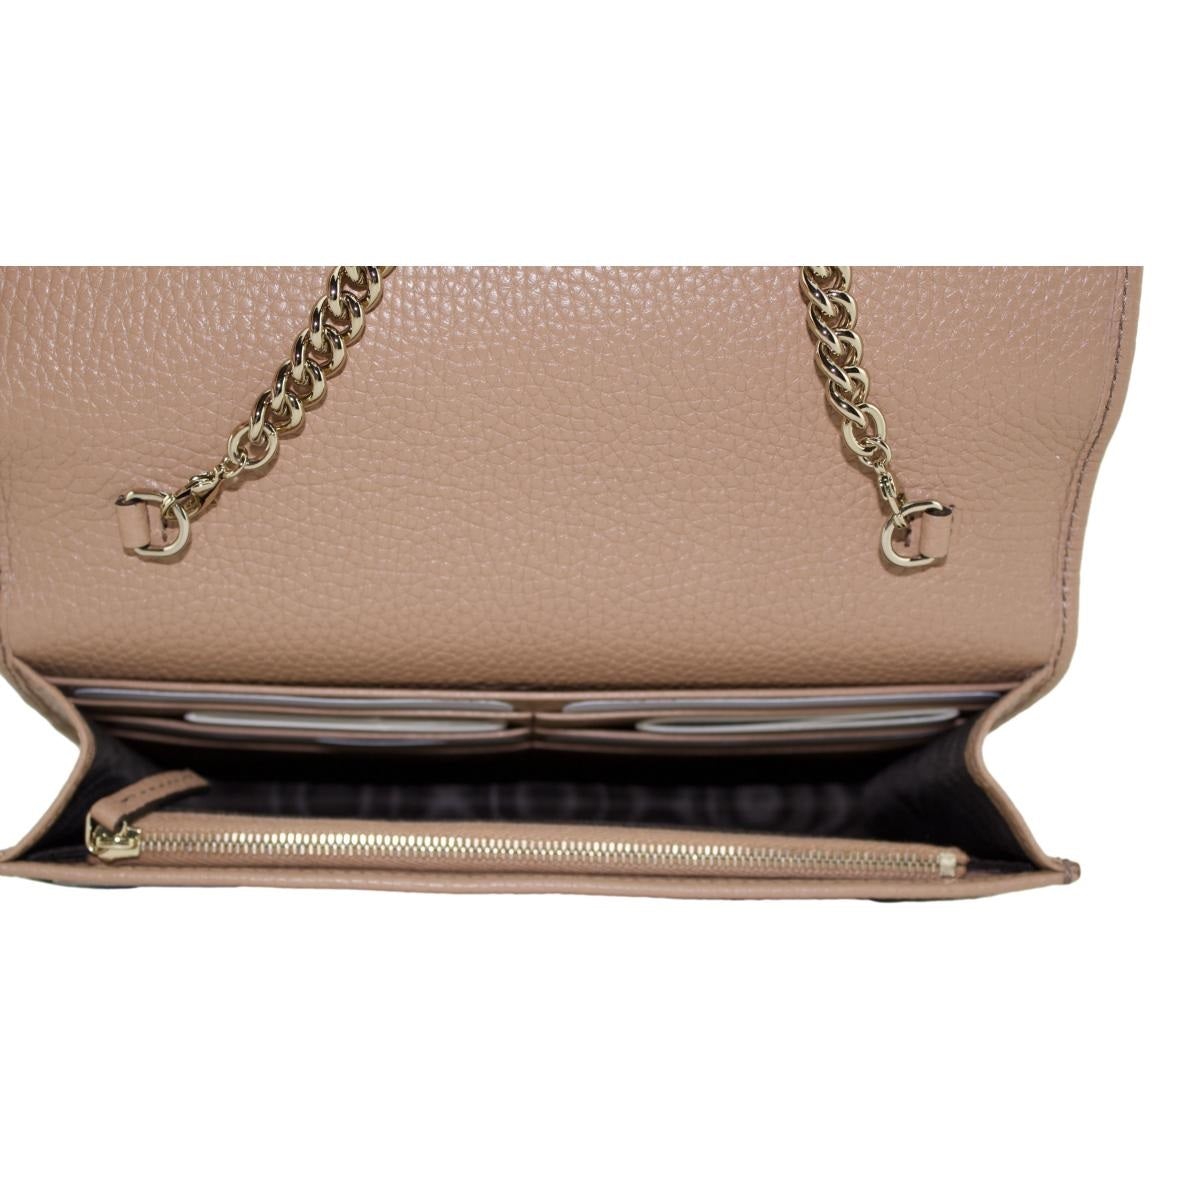 Gucci Soho Wallet on Chain Camelia Beige Leather Crossbody Clutch Bag